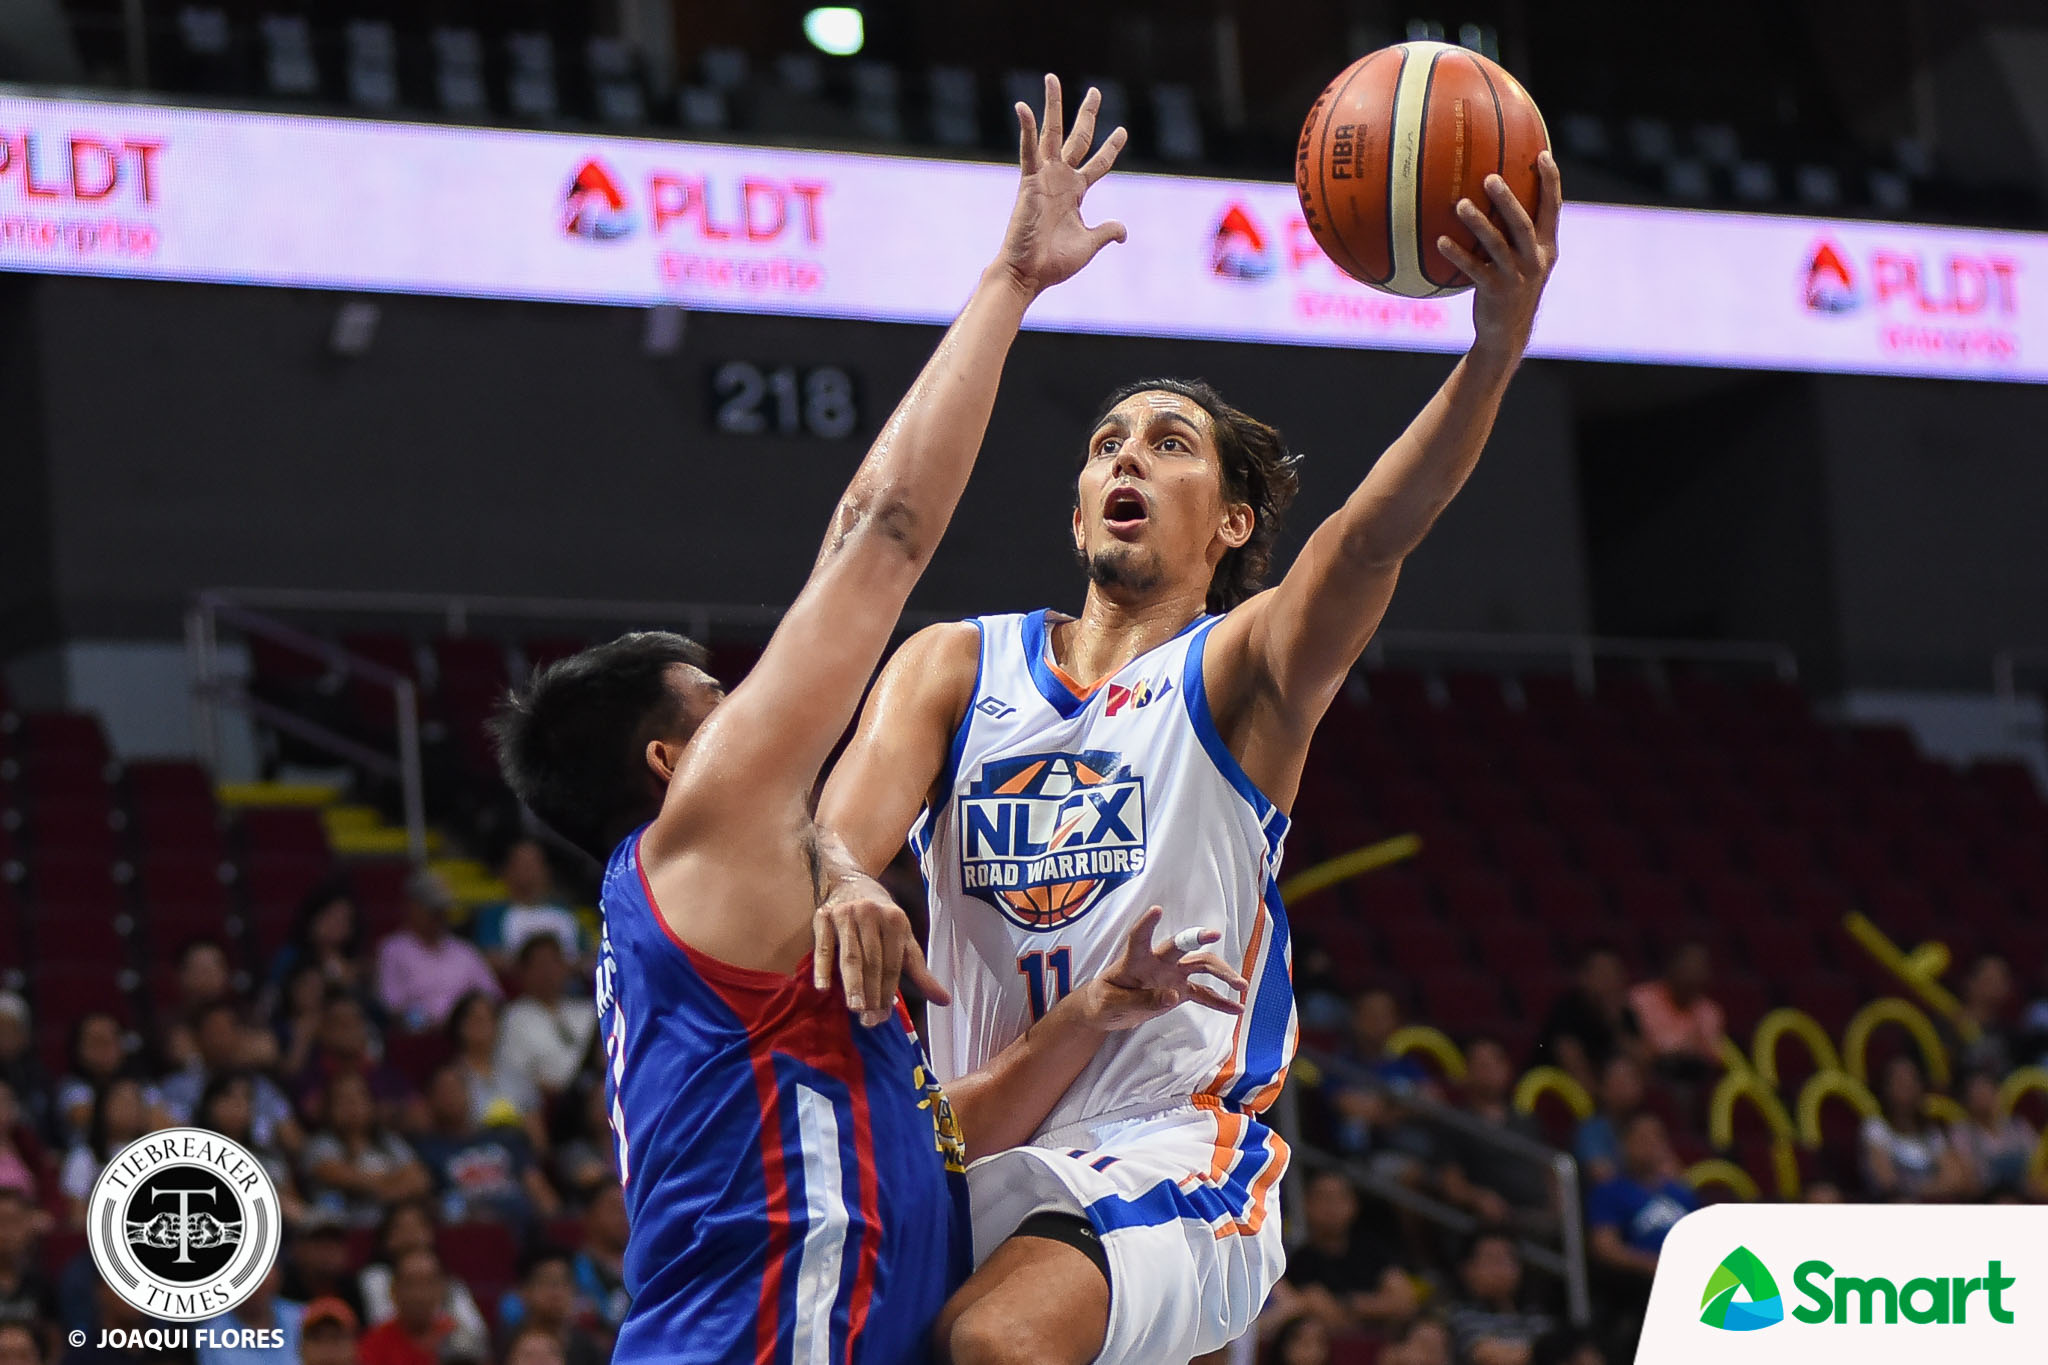 PBA-2018-Magnoli-vs.-NLEX-G2-Mallari-3443 Law of averages catches up to NLEX, says Yeng Guiao Basketball News PBA  - philippine sports news